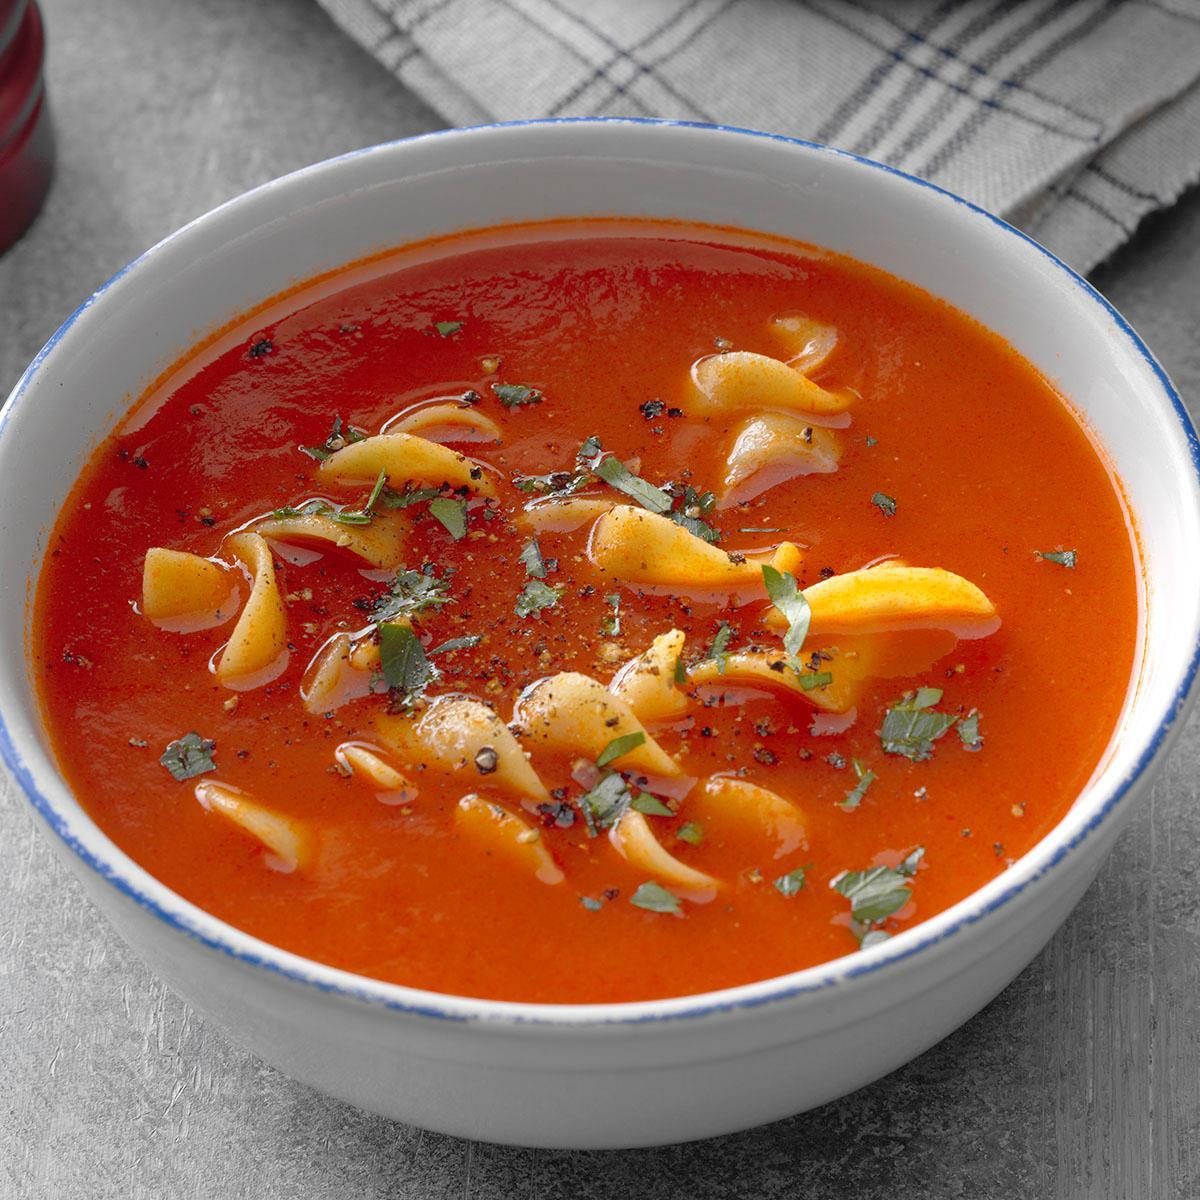 Grandma's Tomato Soup